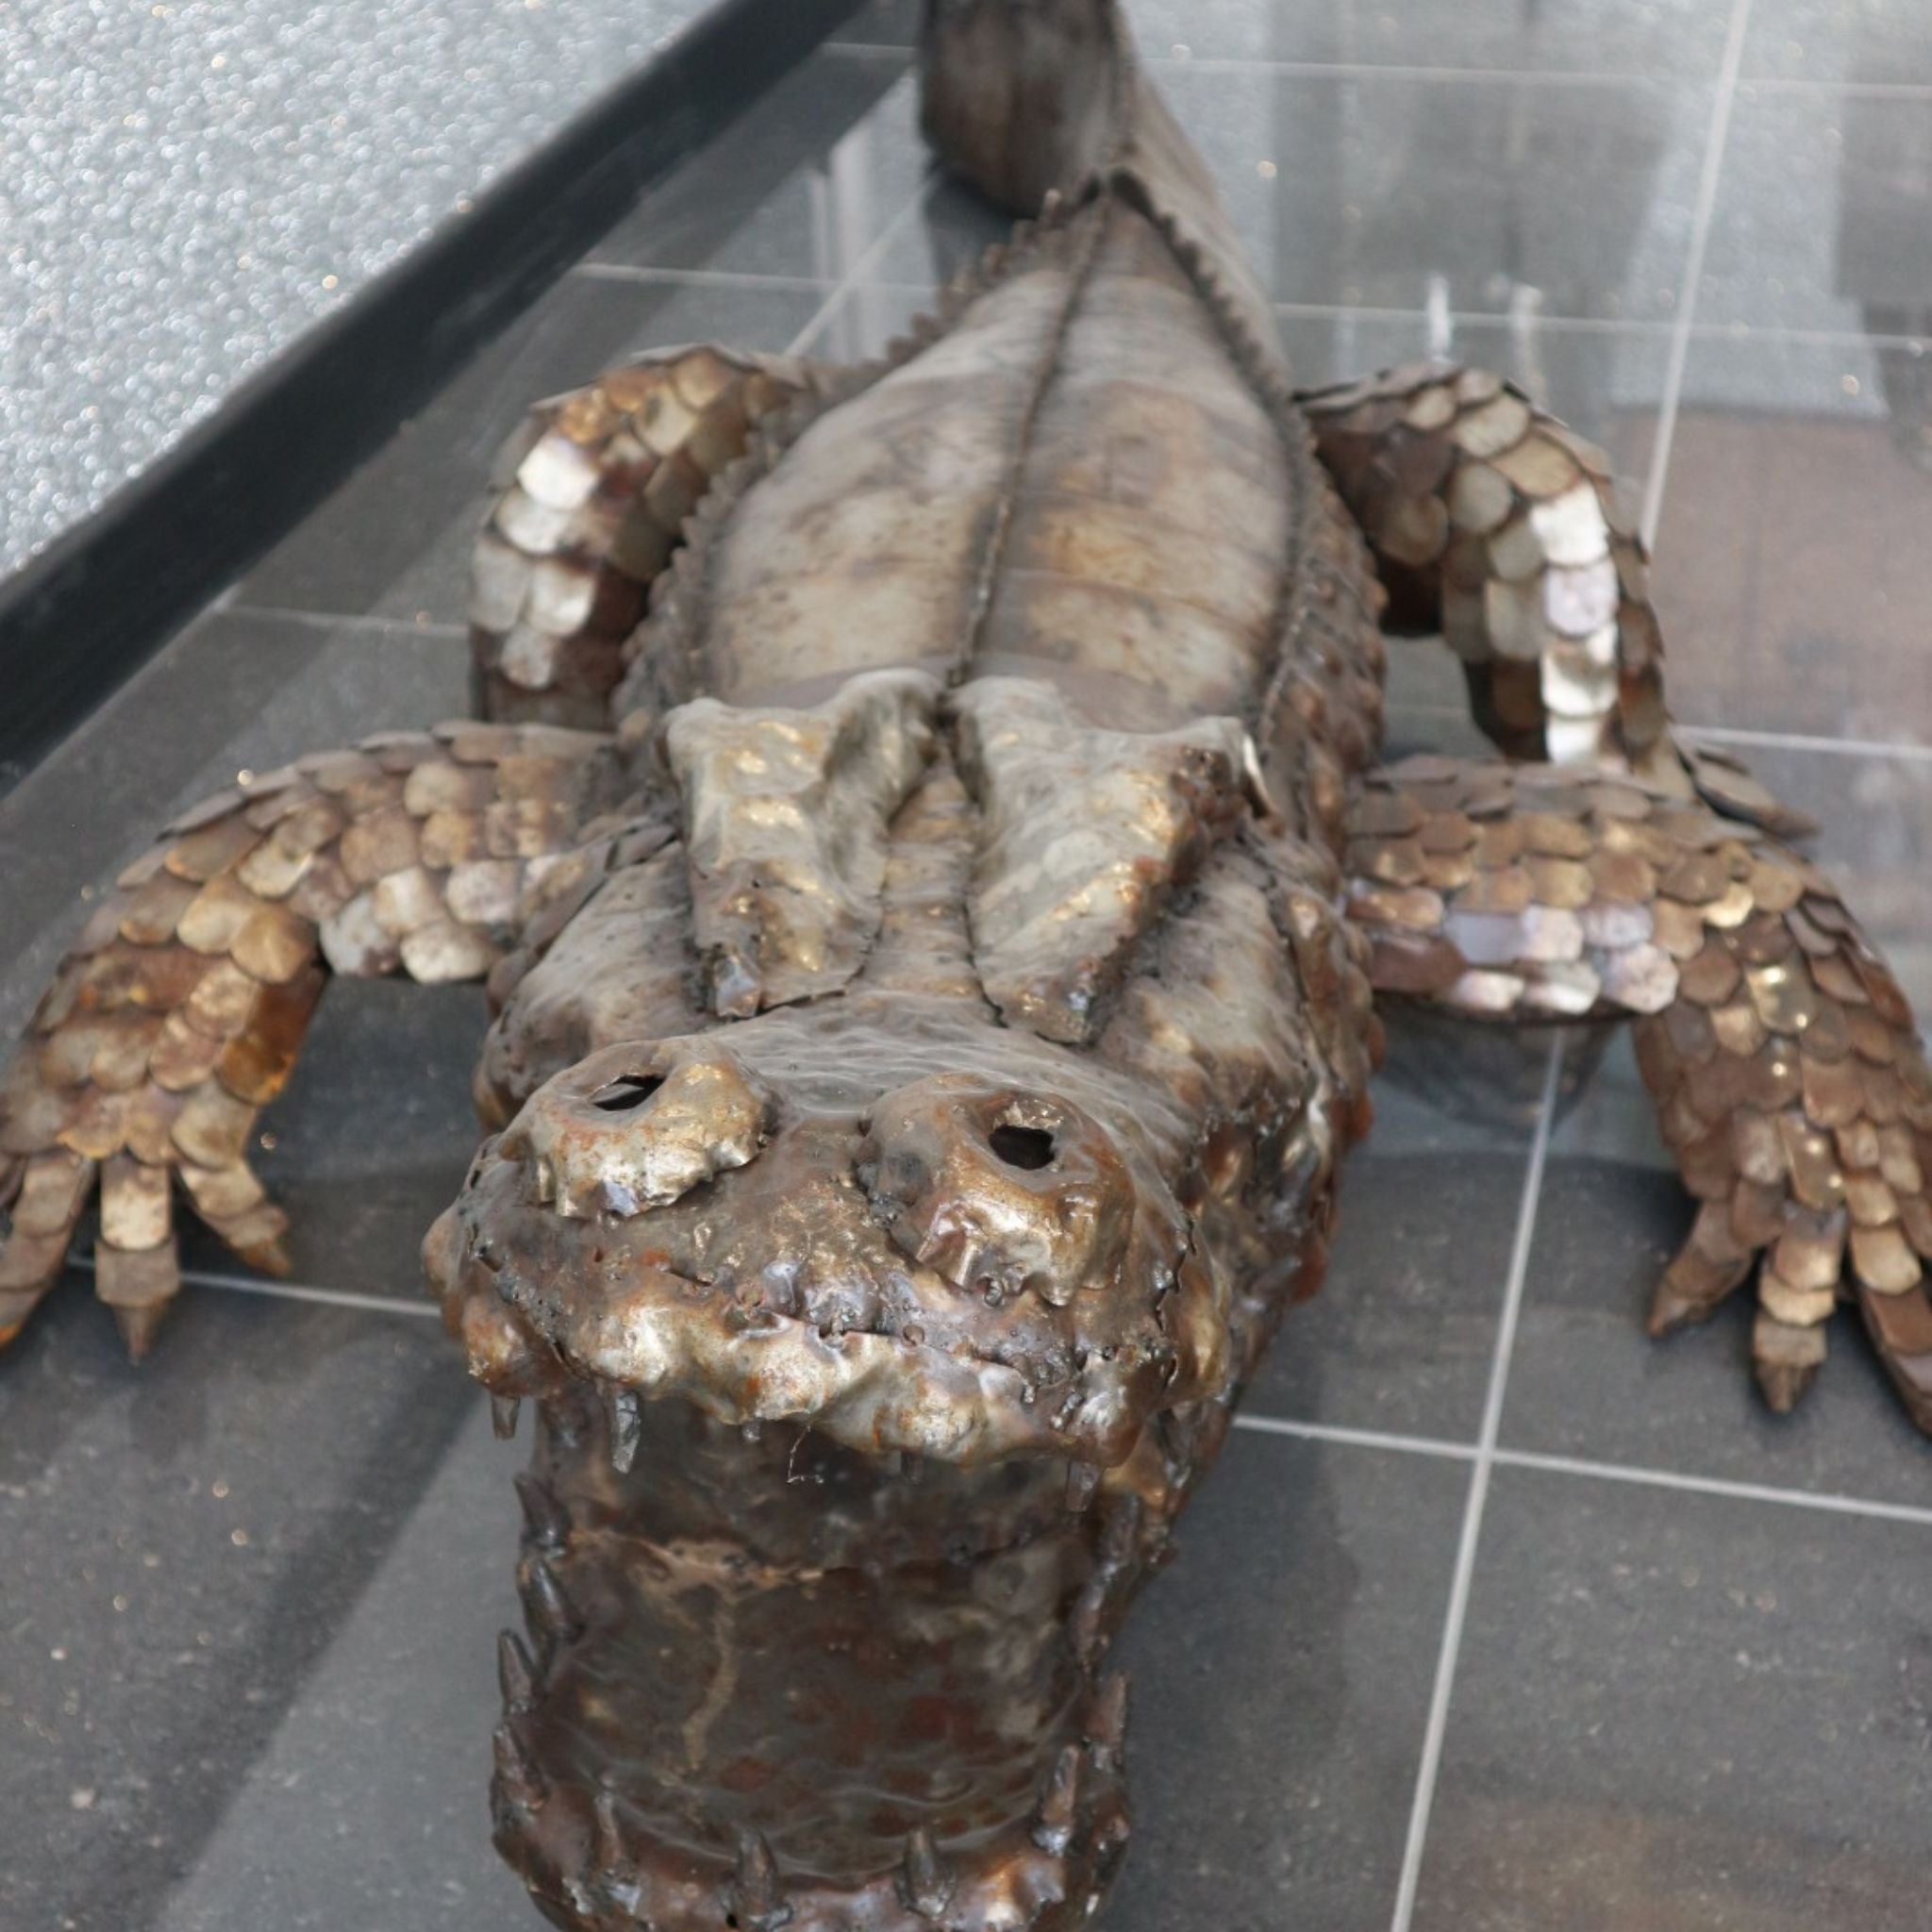 Natural Crocodile - Pangea Sculptures